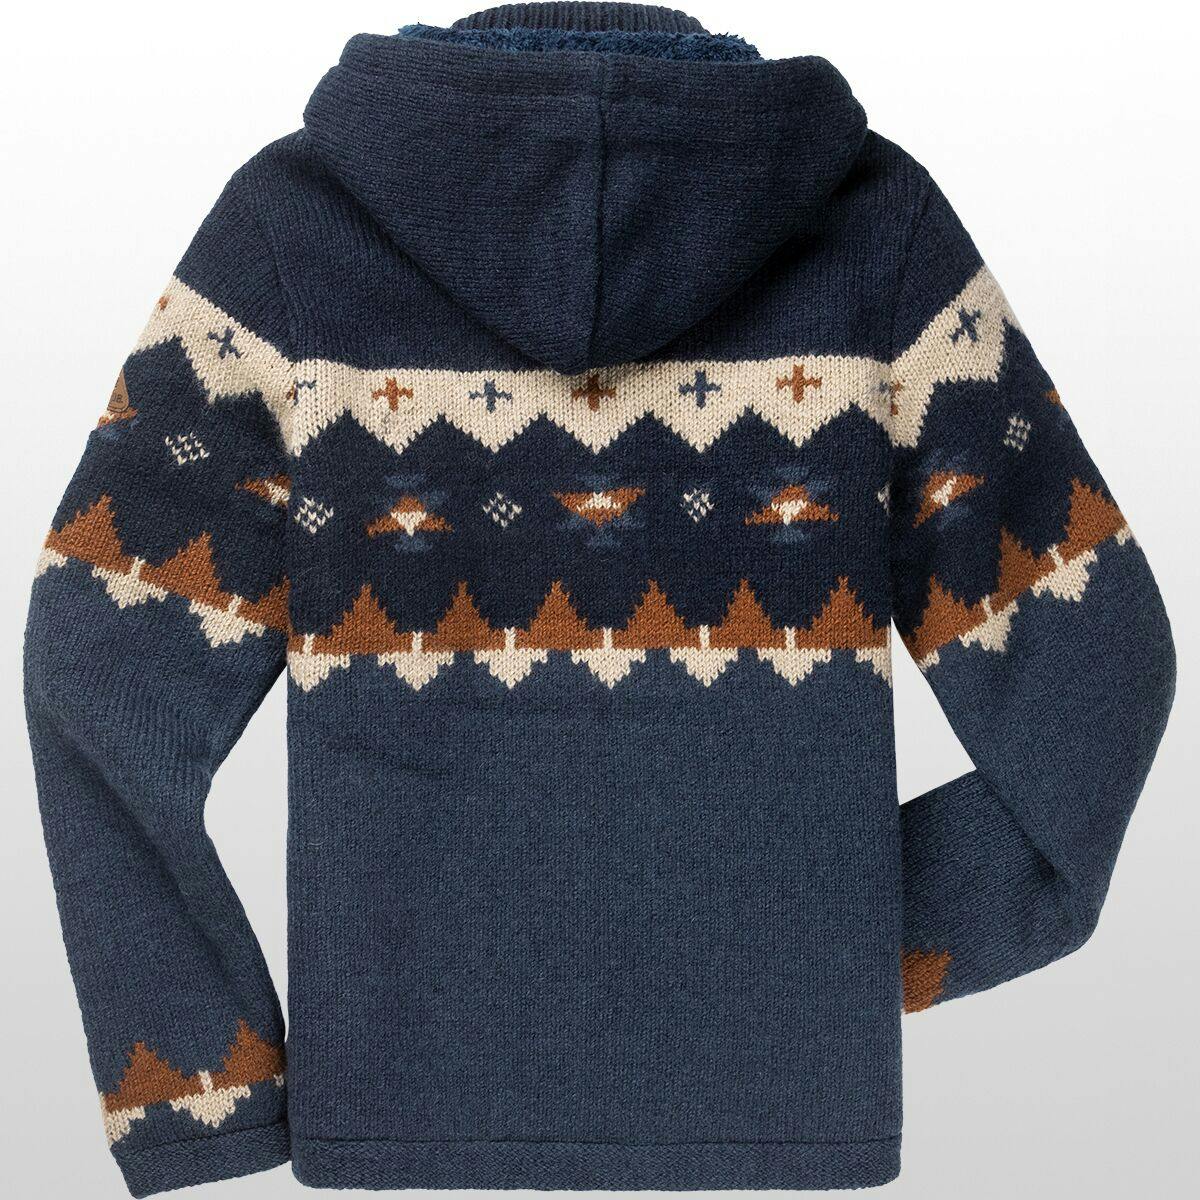 Sherpa Adventure Gear Men's Kirtipur Insulated Cardigan Sweater